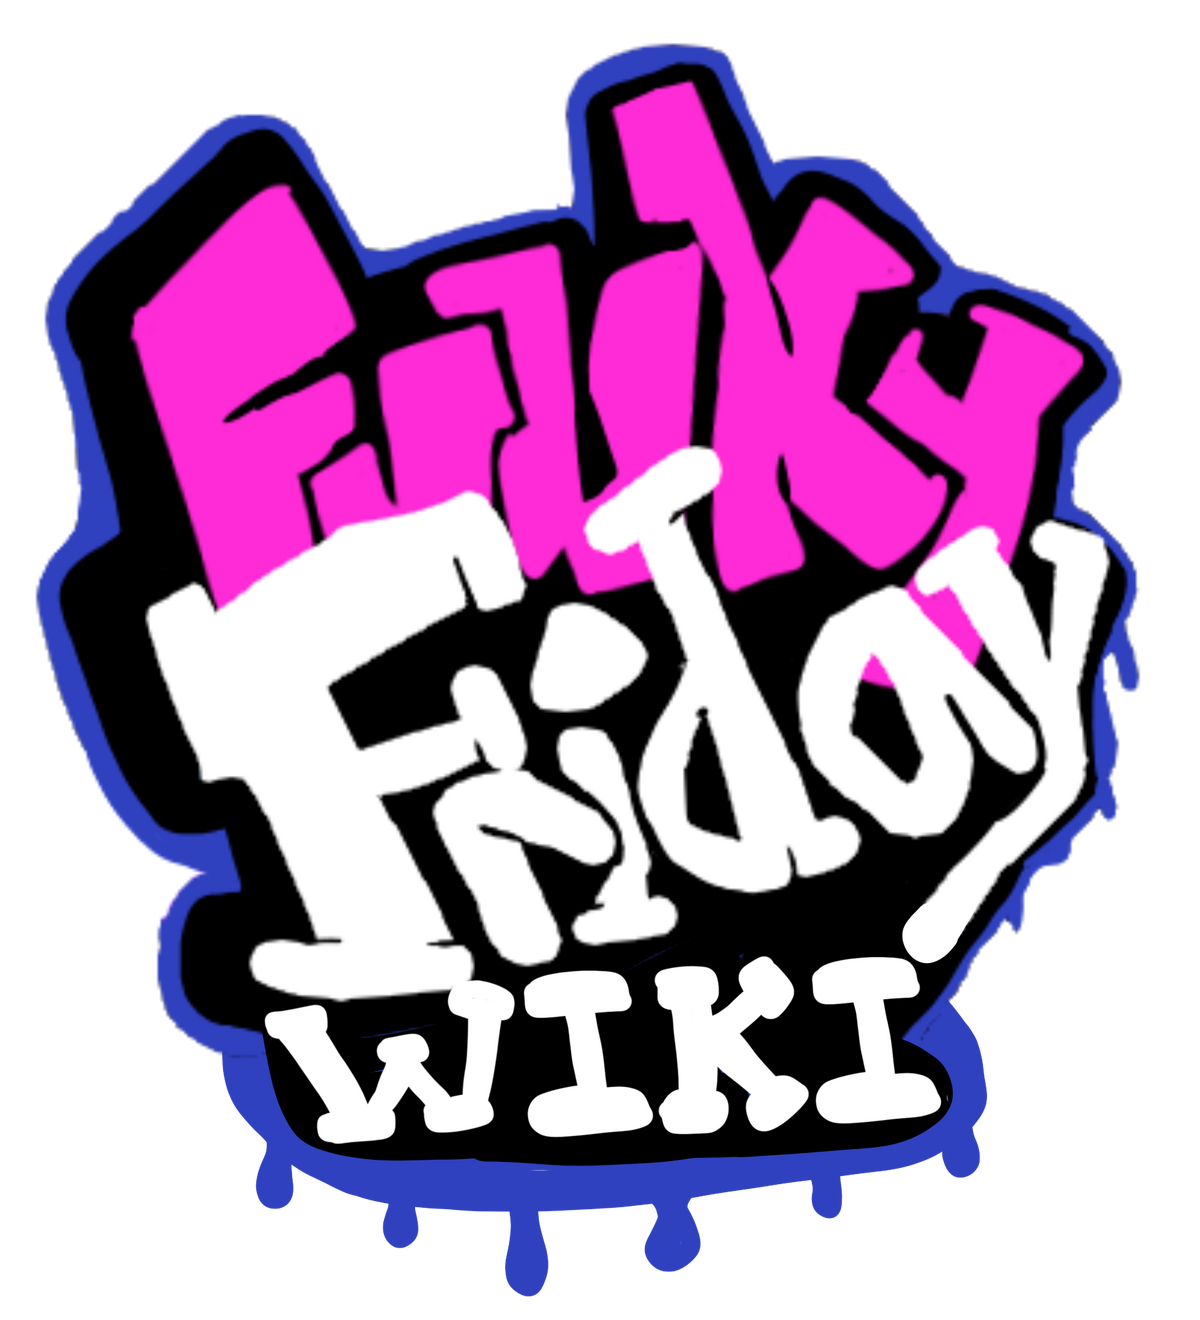 Funky Friday Wiki